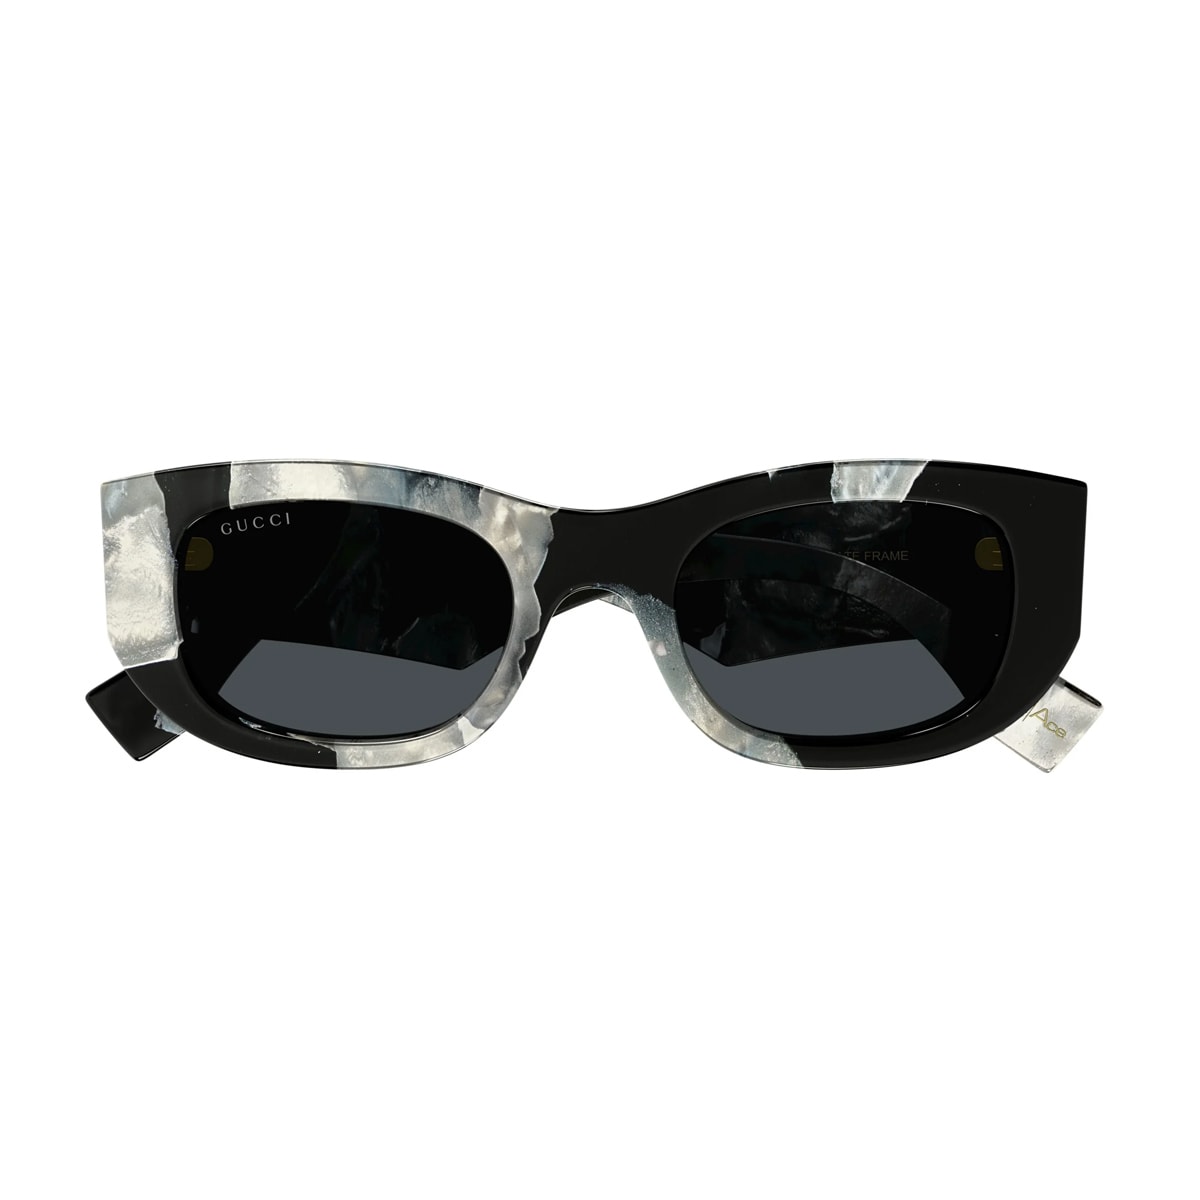 Gg1627s Sunglasses